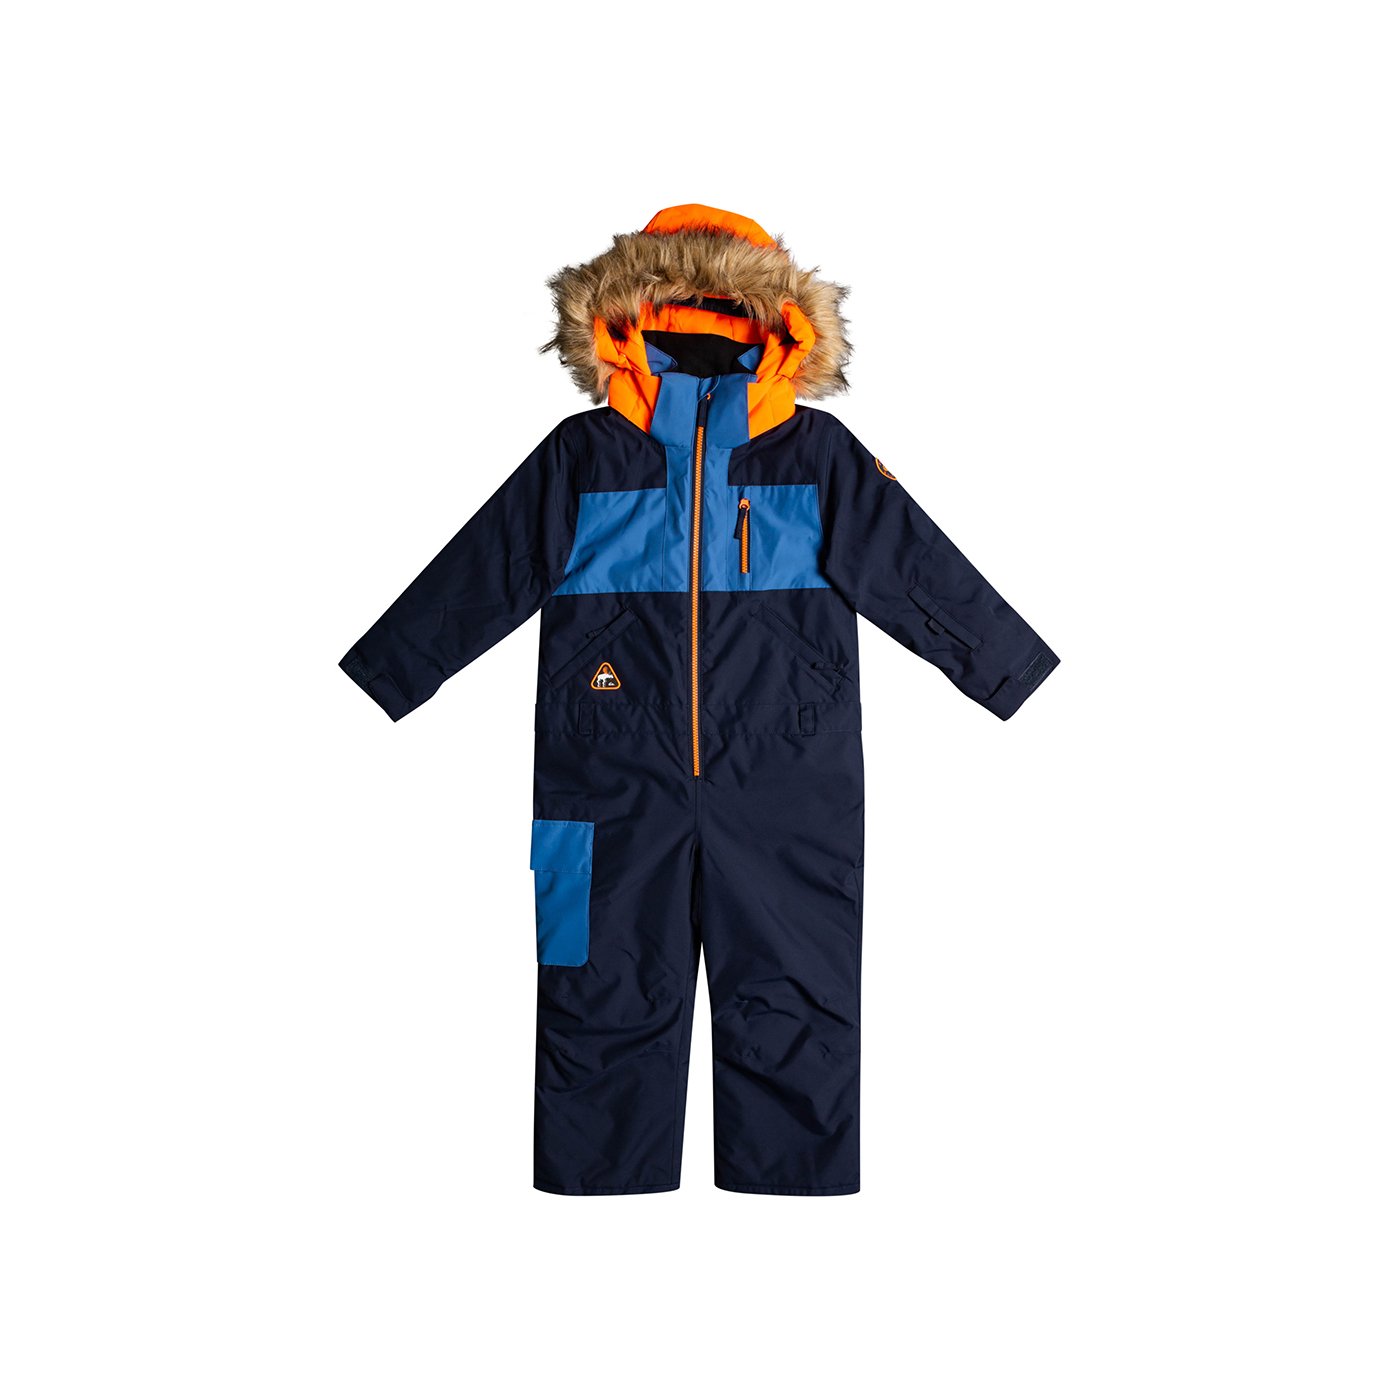 Quiksilver Rookie Suit Çocuk Kayak/Snowboard Tulumu - MAVİ - 1